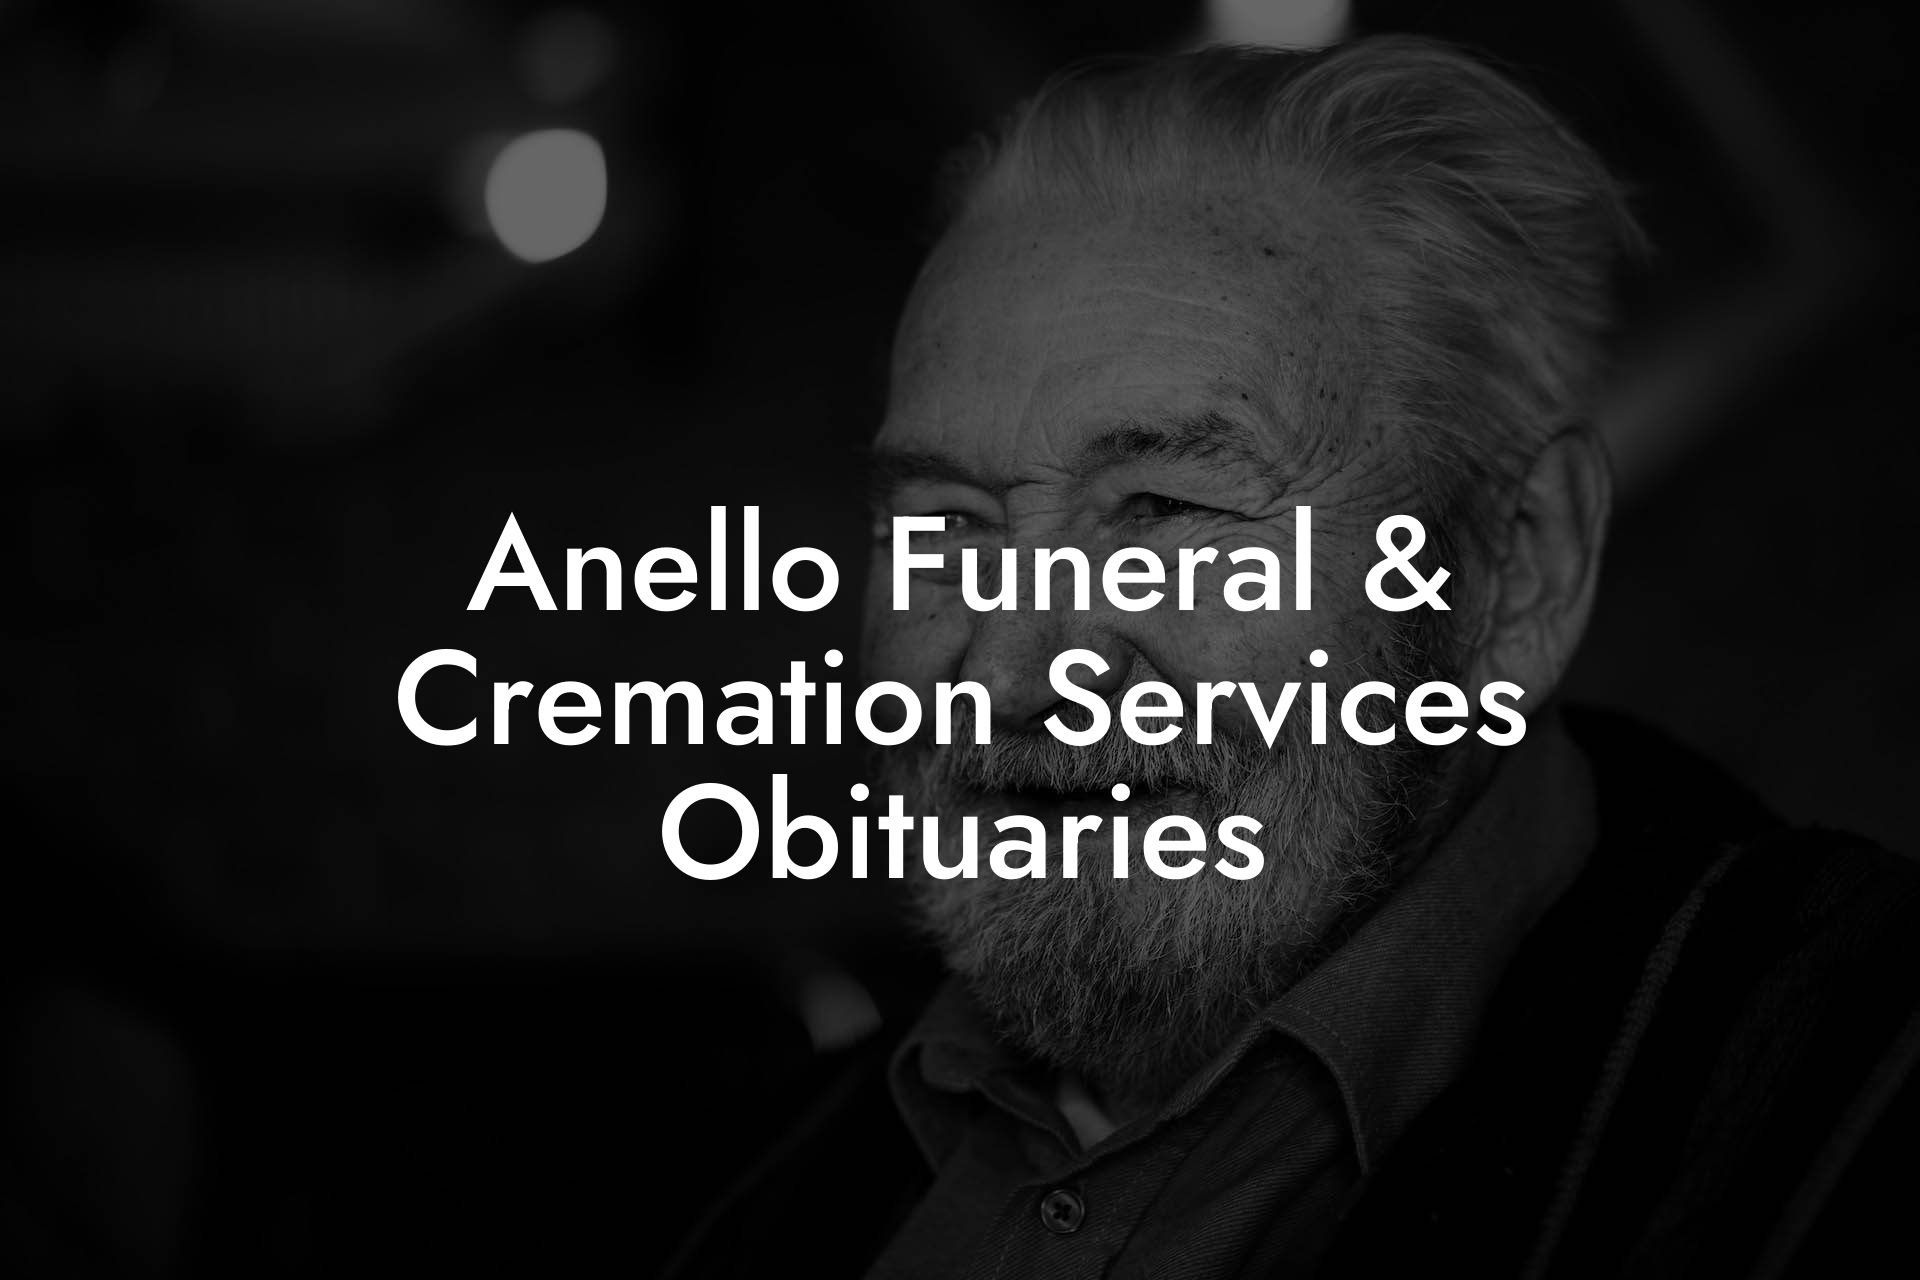 Anello Funeral & Cremation Services Obituaries